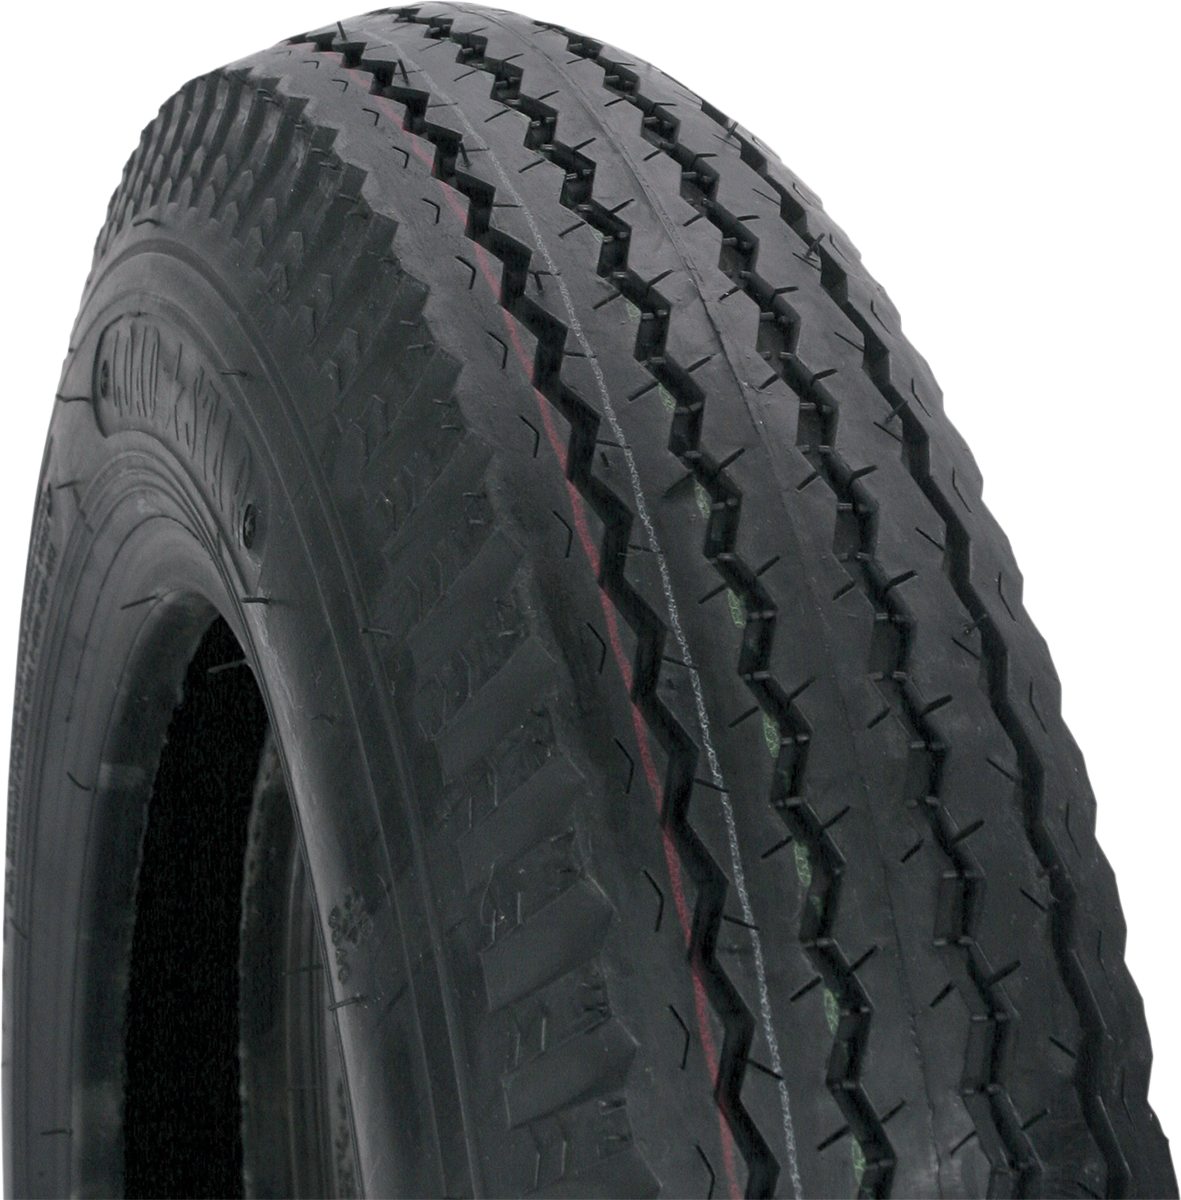 Trailer Tire - Load Range C - 4.80"x12" - 6 Ply